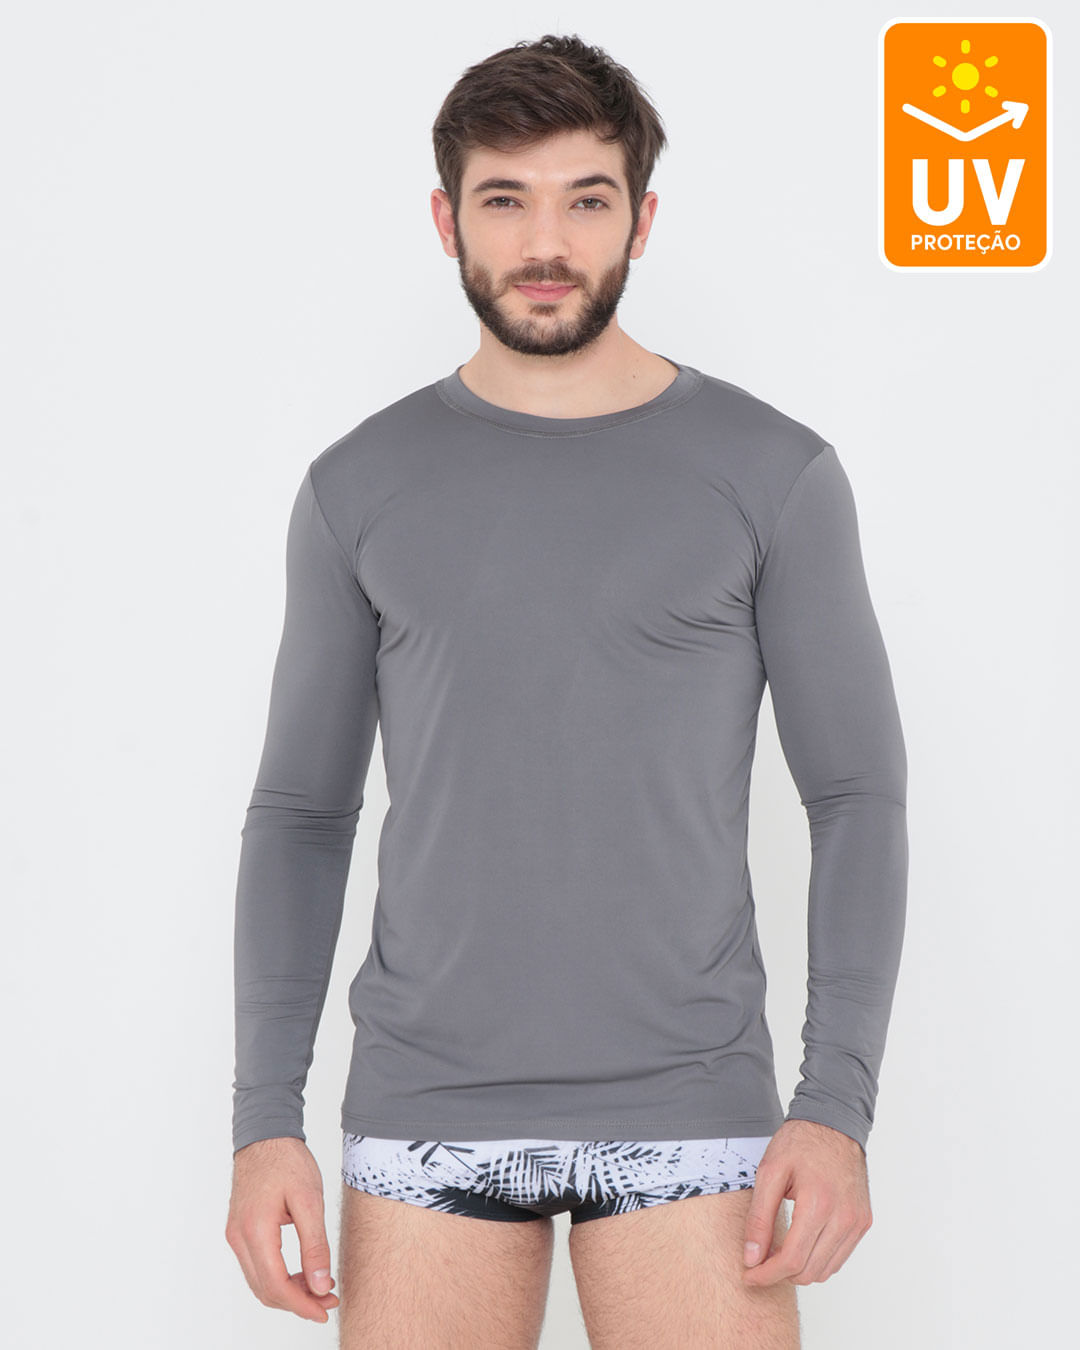 Camiseta-Manga-Longa-Protecao-UV-50-Cinza